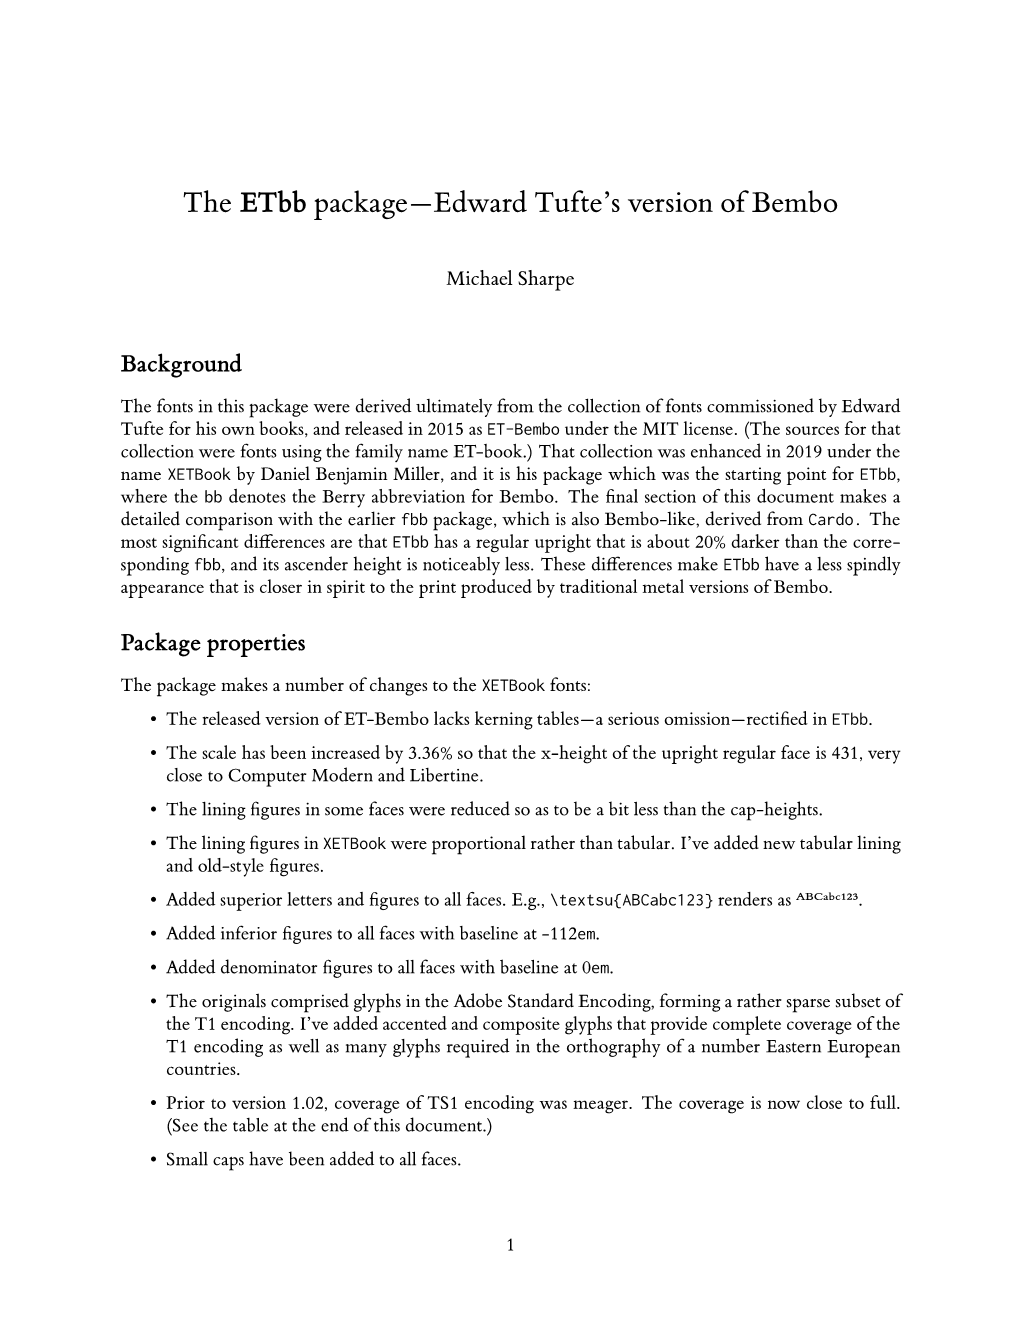 The Etbb Package—Edward Tufte's Version of Bembo